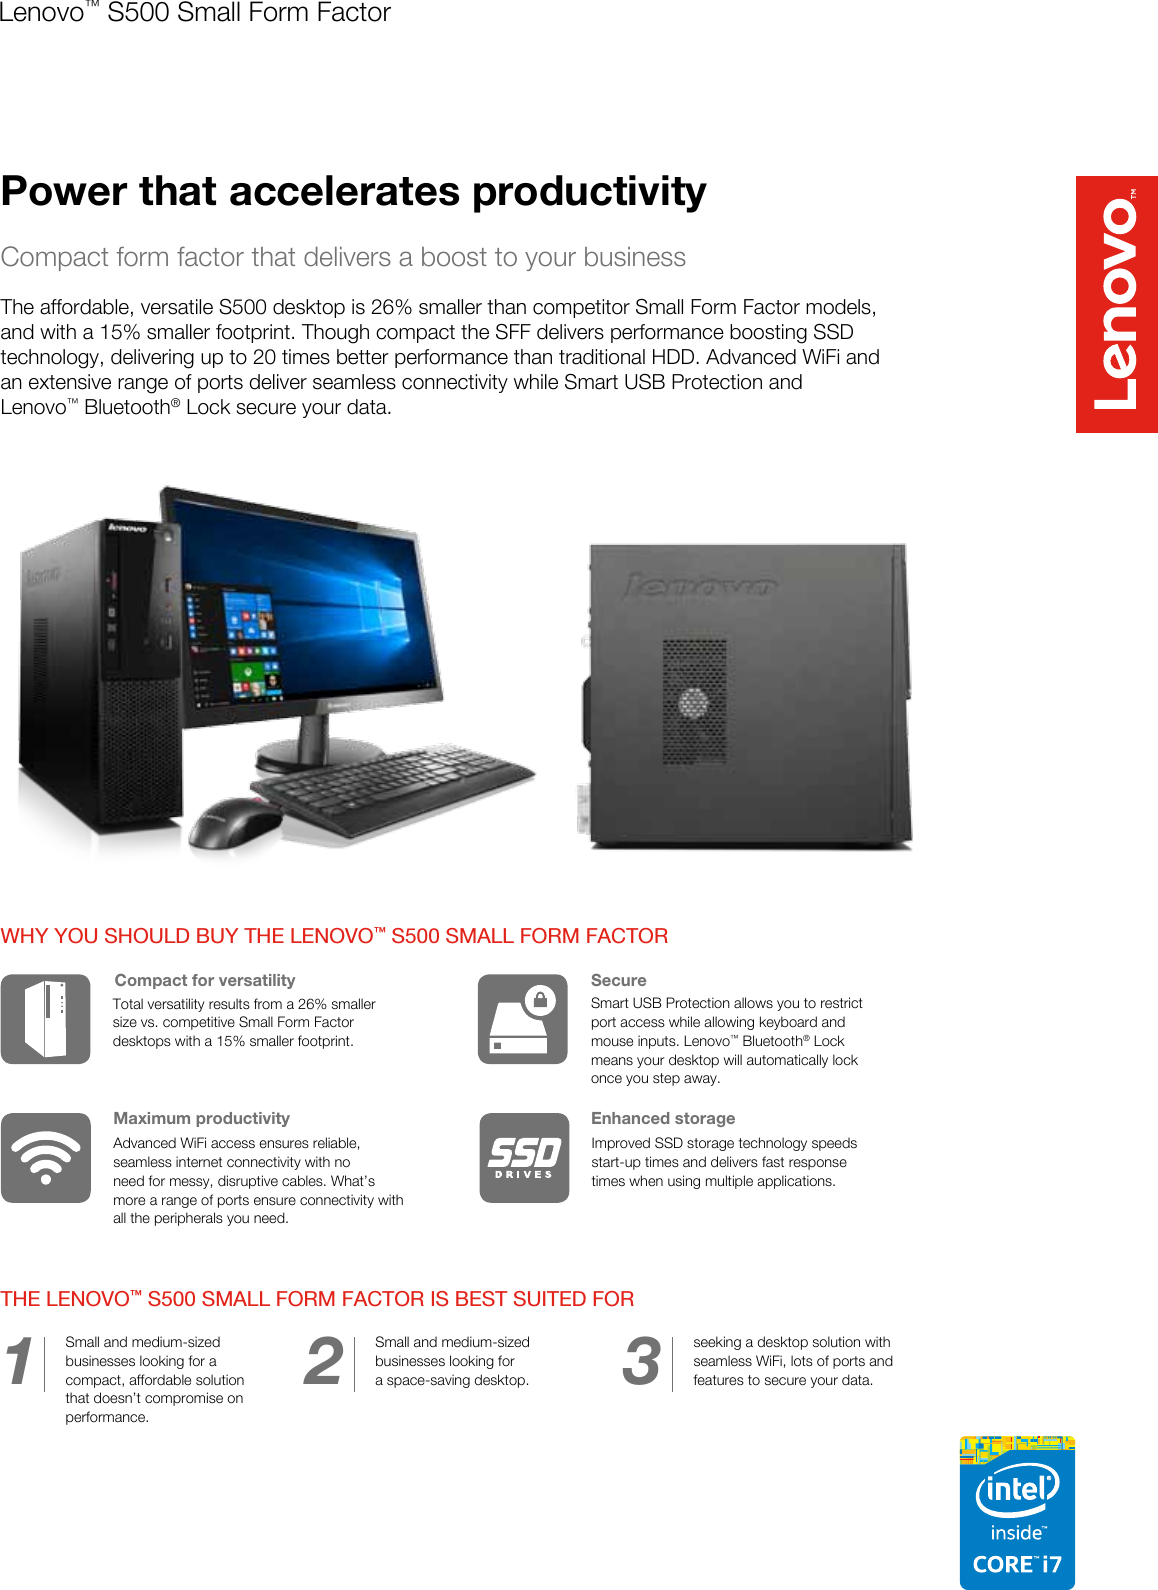 Page 1 of 2 - Lenovo S500 Spec Sheet 201509 User Manual Desktop (Lenovo) - Type 10HS